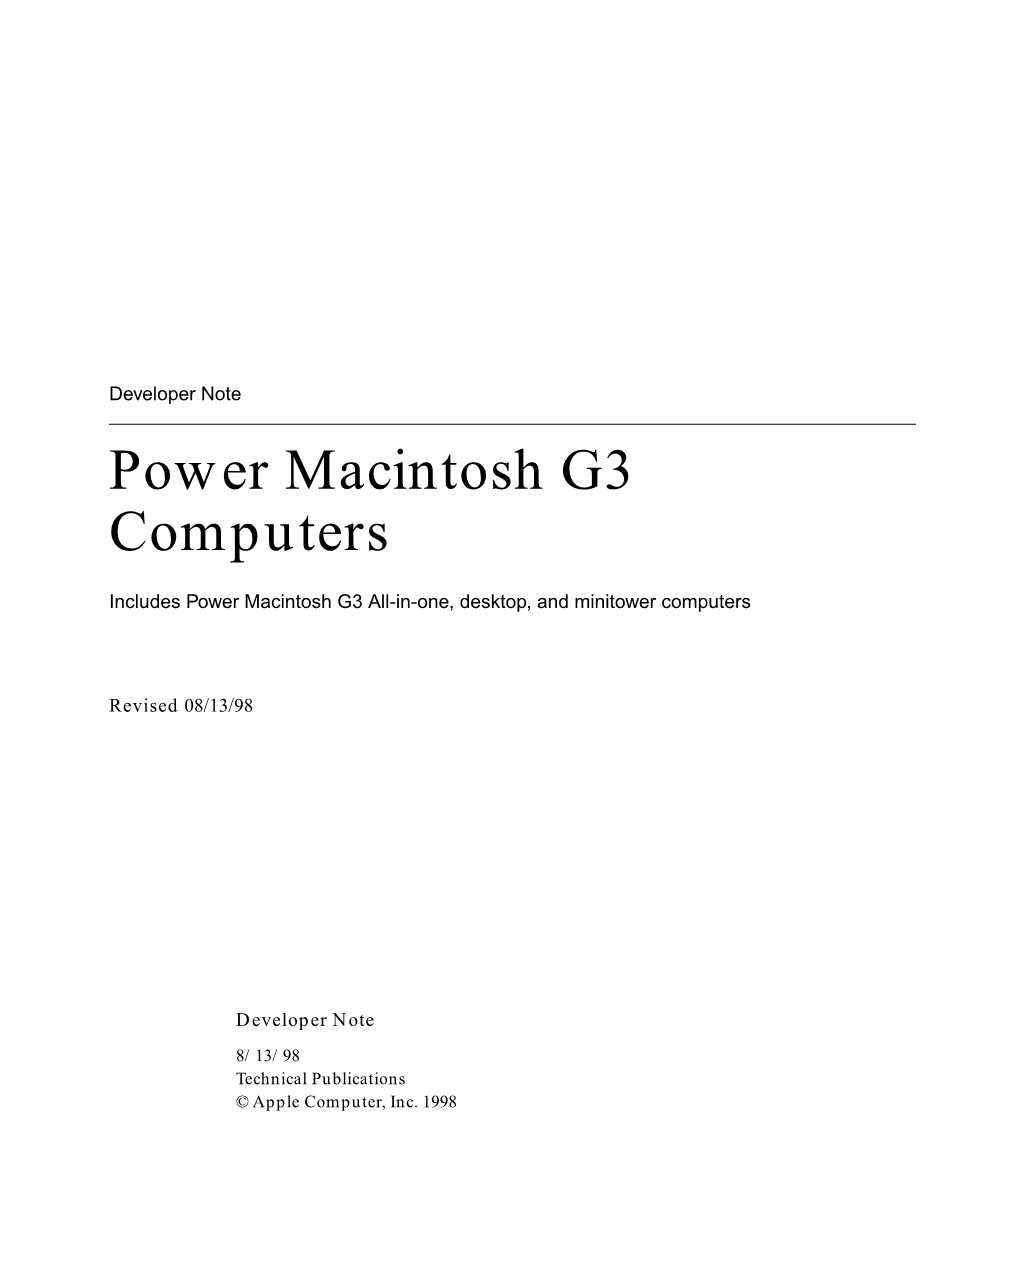 Power Macintosh G3 Computers